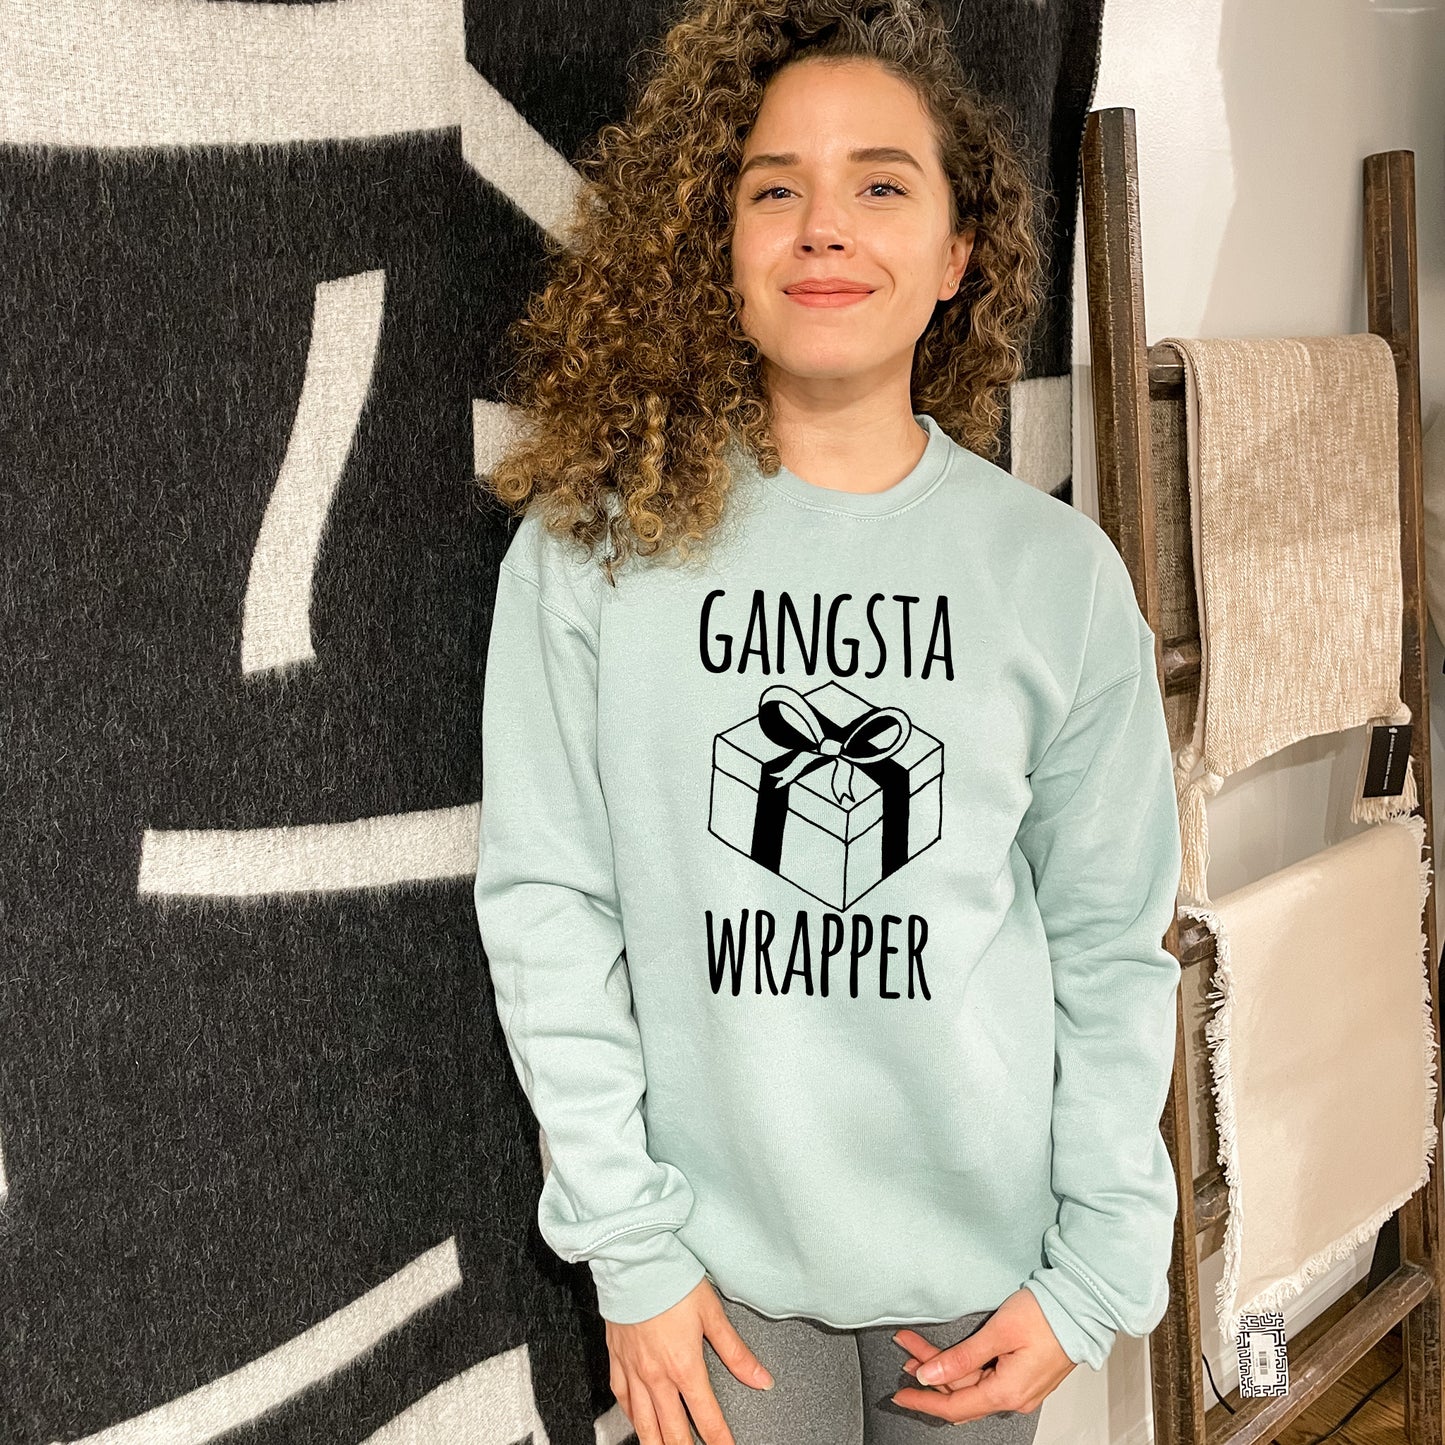 Gangsta Wrapper - Unisex Sweatshirt - Heather Gray or Dusty Blue